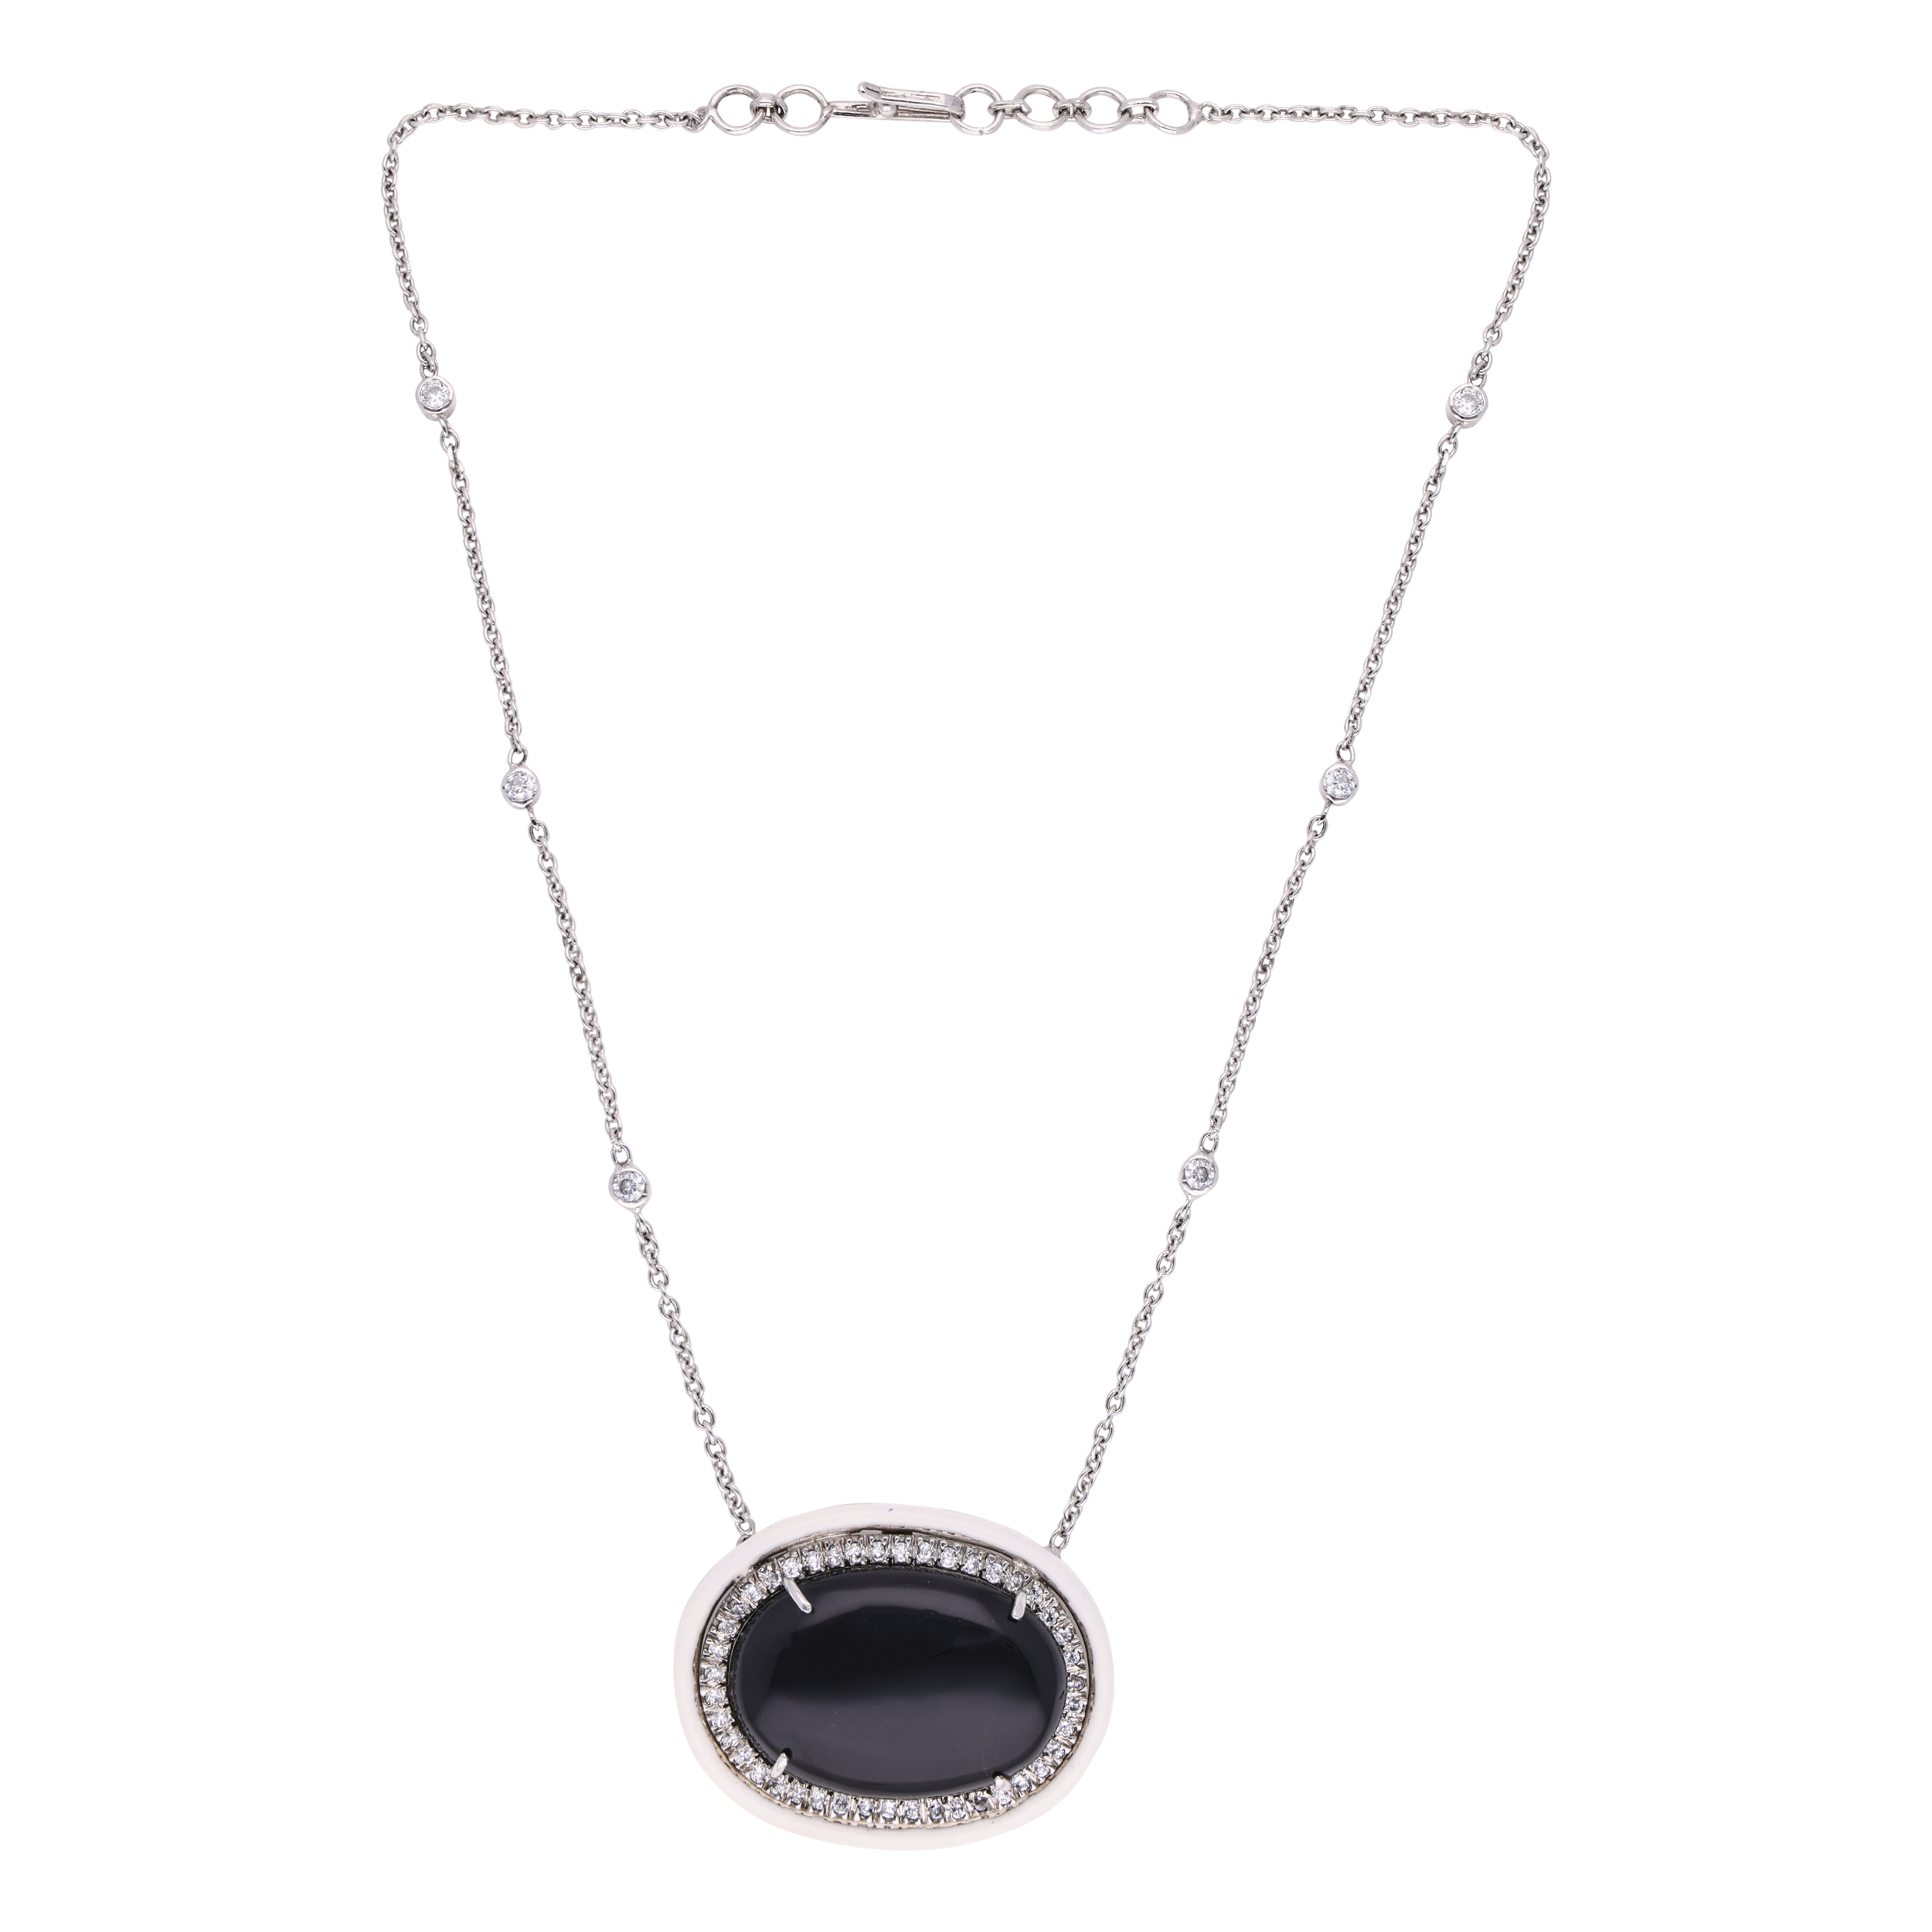 Sleek Sterling Silver Chain Pendant with Black Onyx Stone | SKU : 0020334314